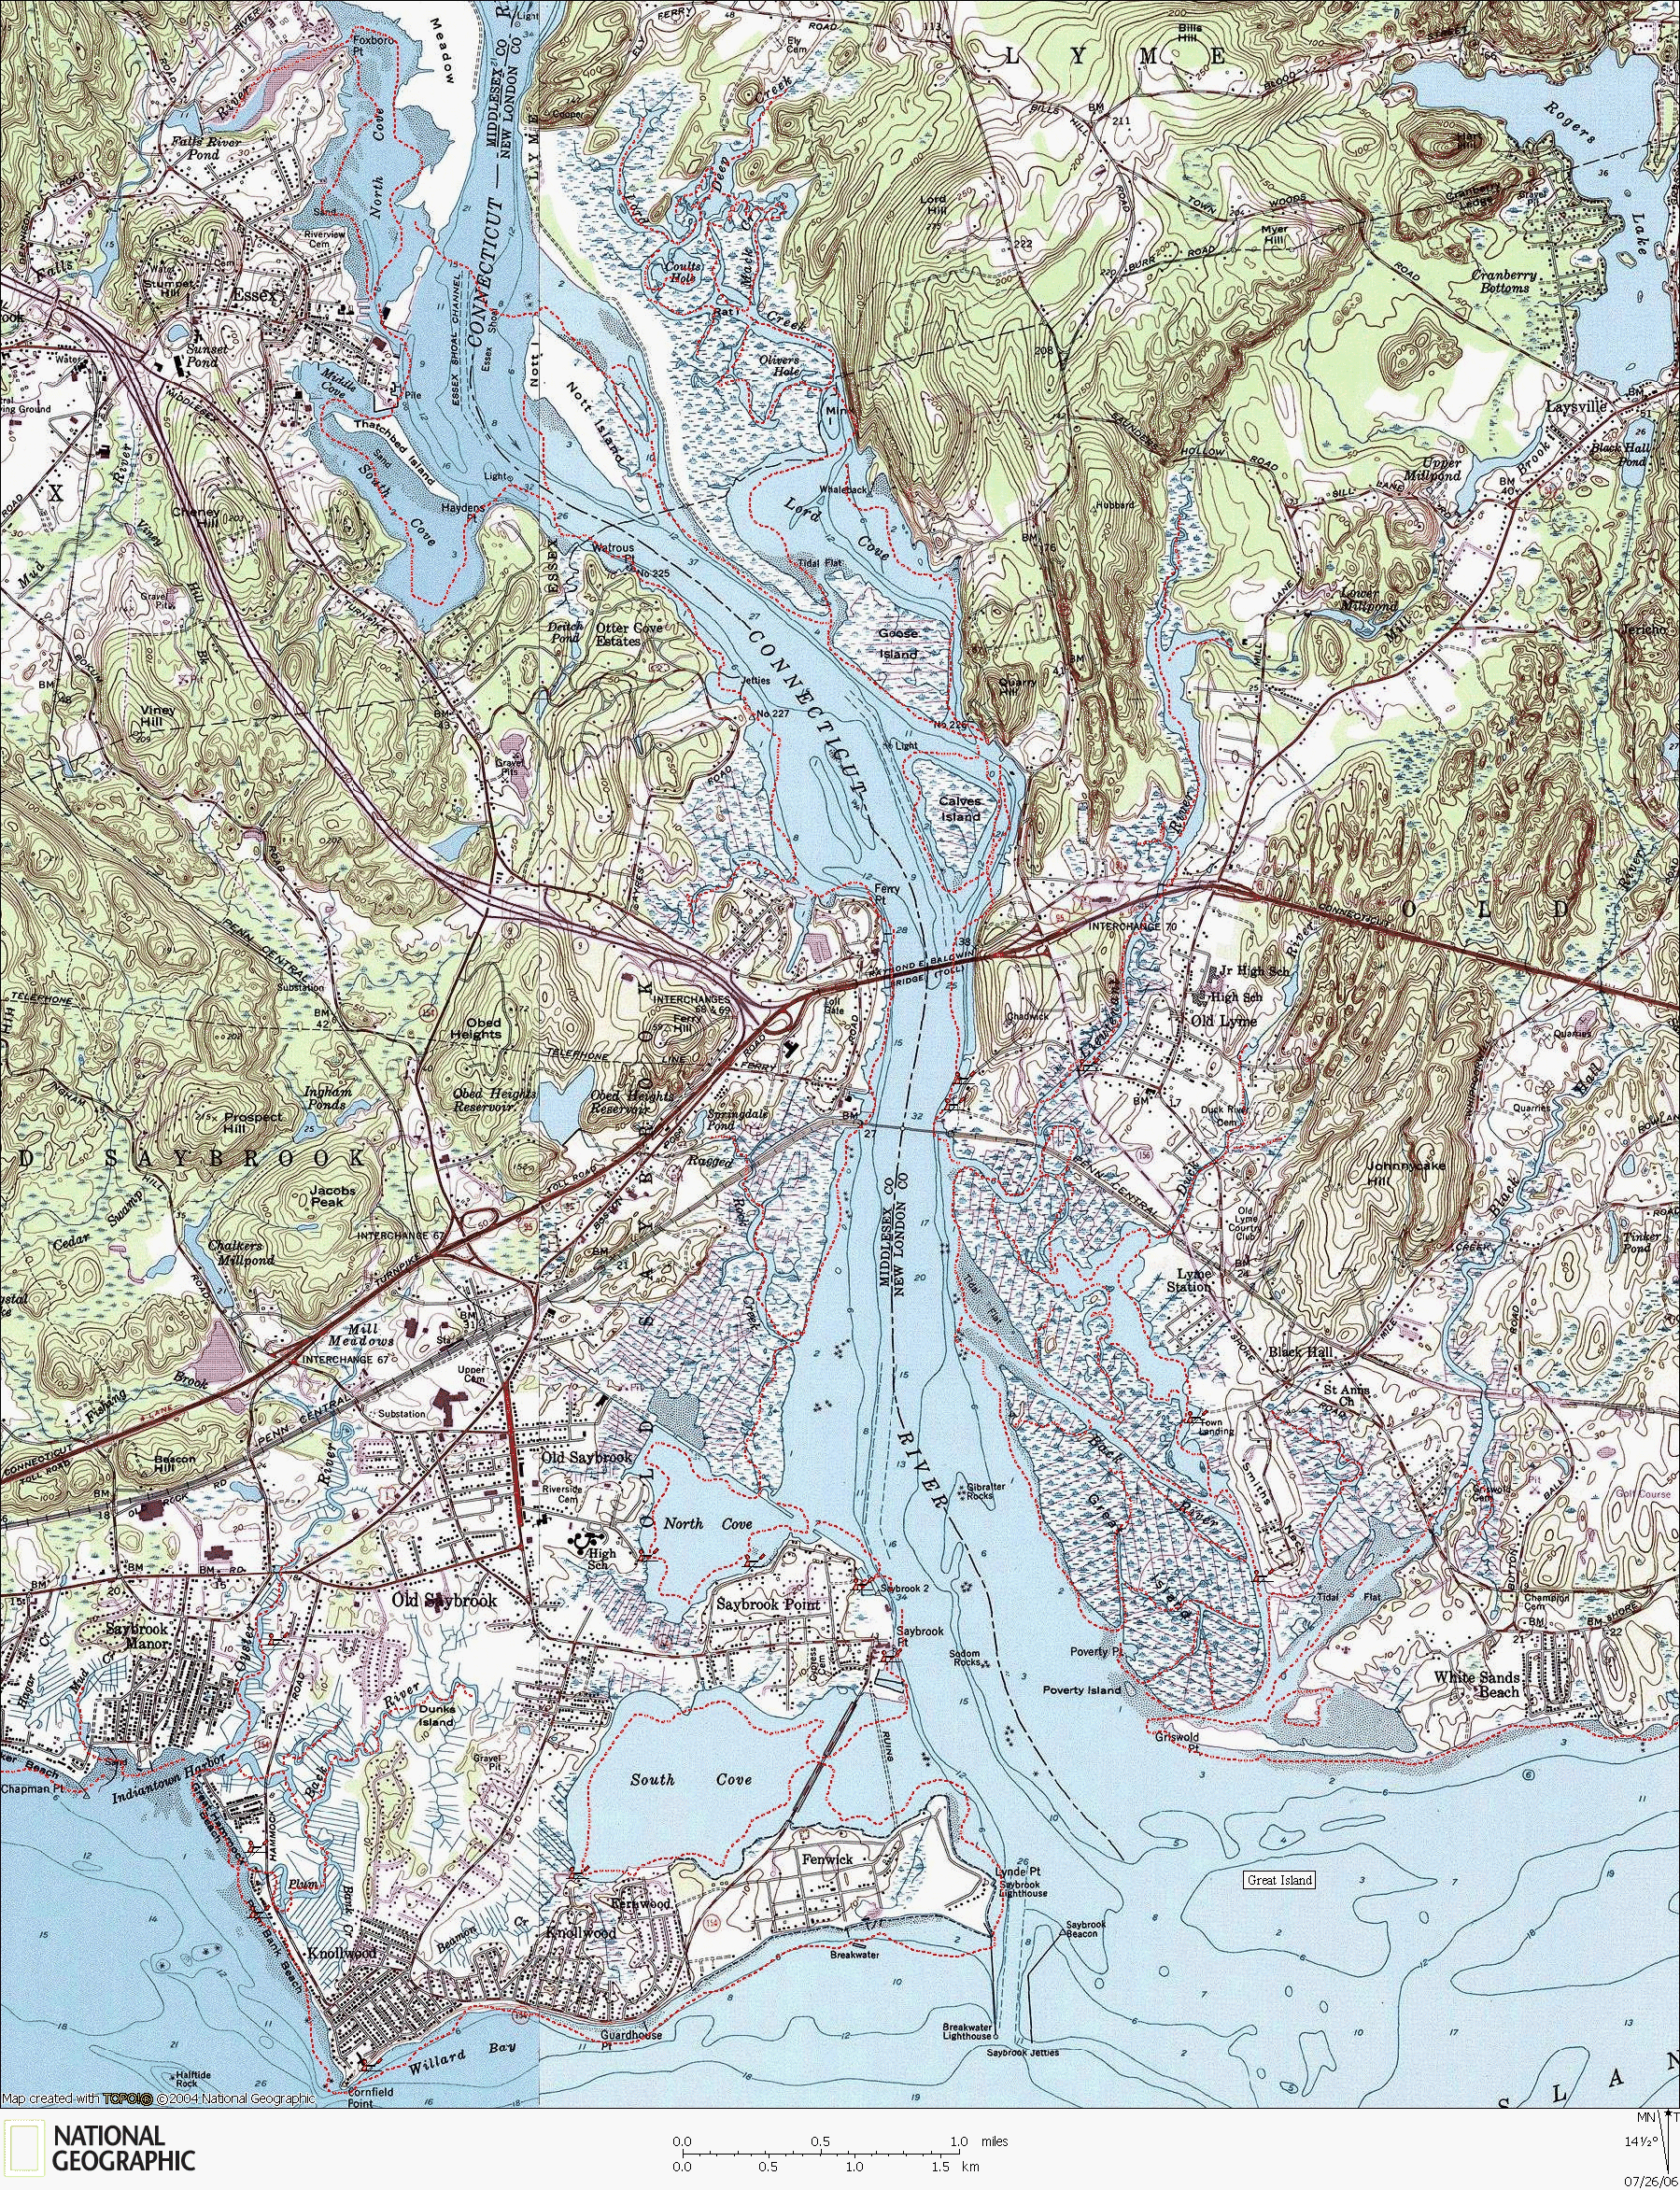 Connecticut, Sea, kayaking, Map, coastal, Long Island Sound, Great island